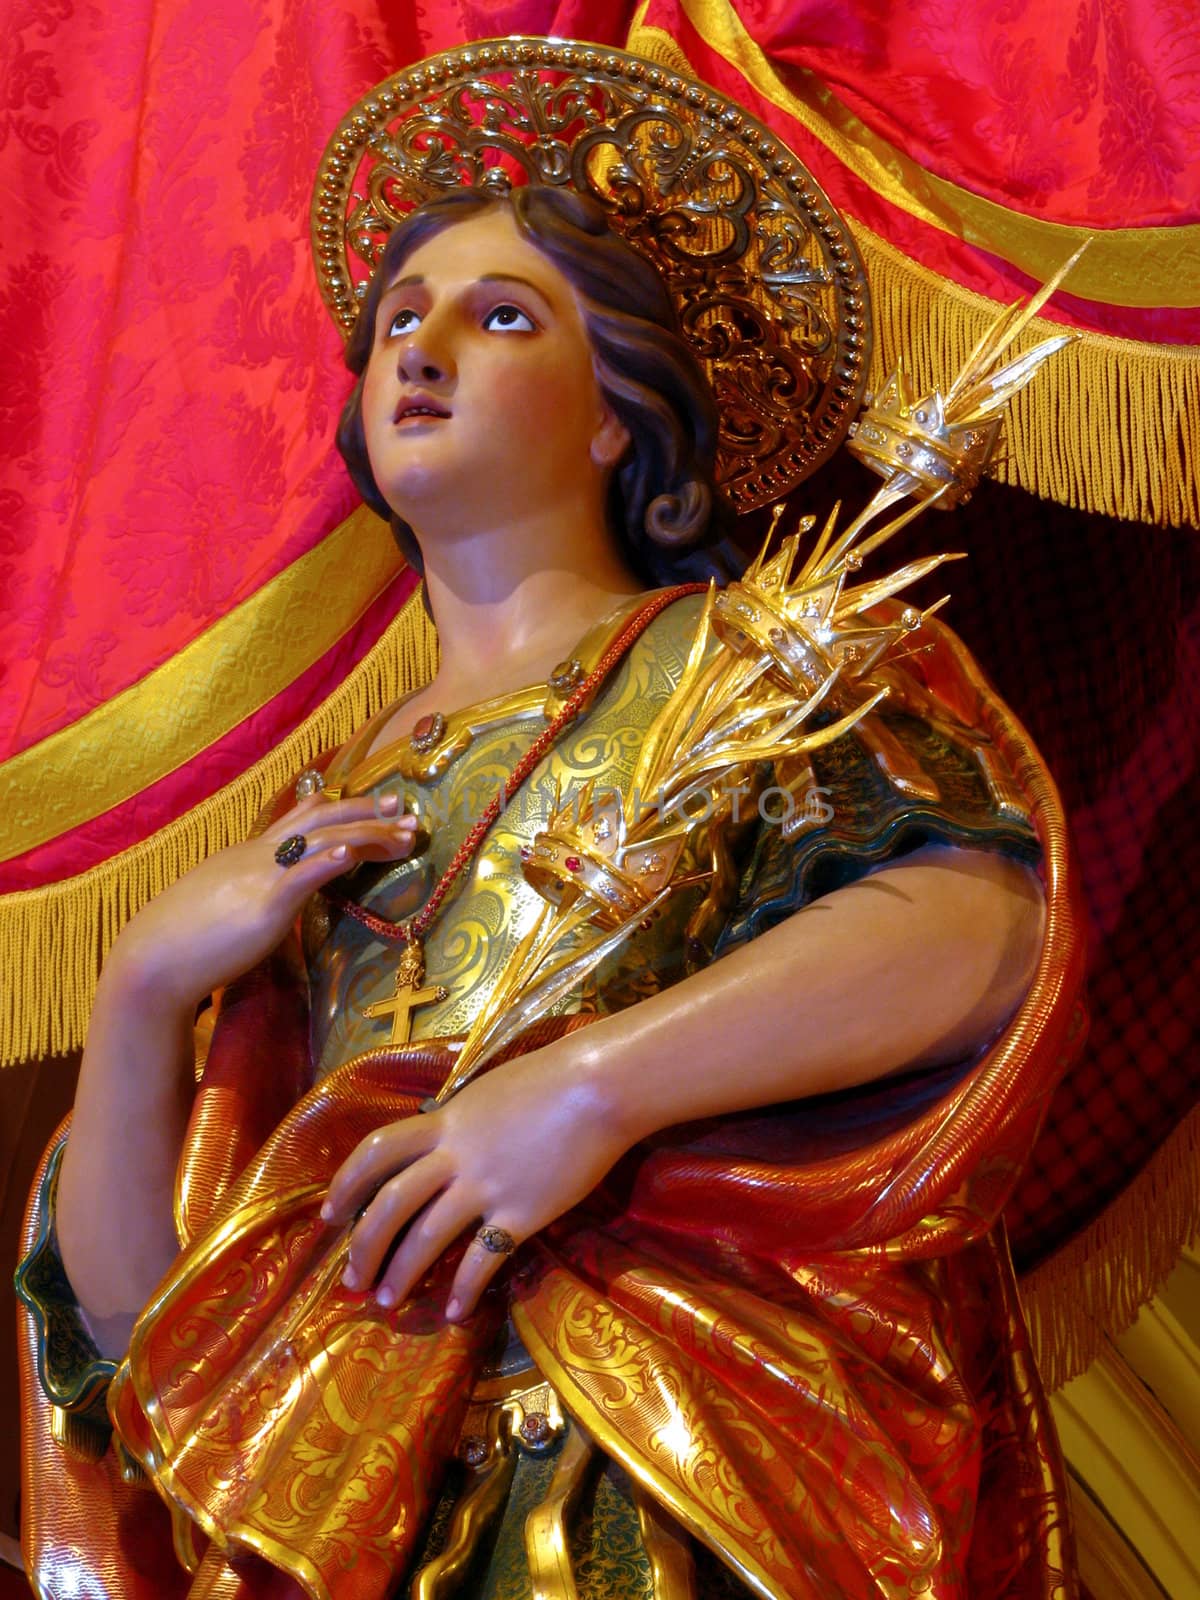 A detail of the statue of Saint George in the parish church of Qormi, Malta.